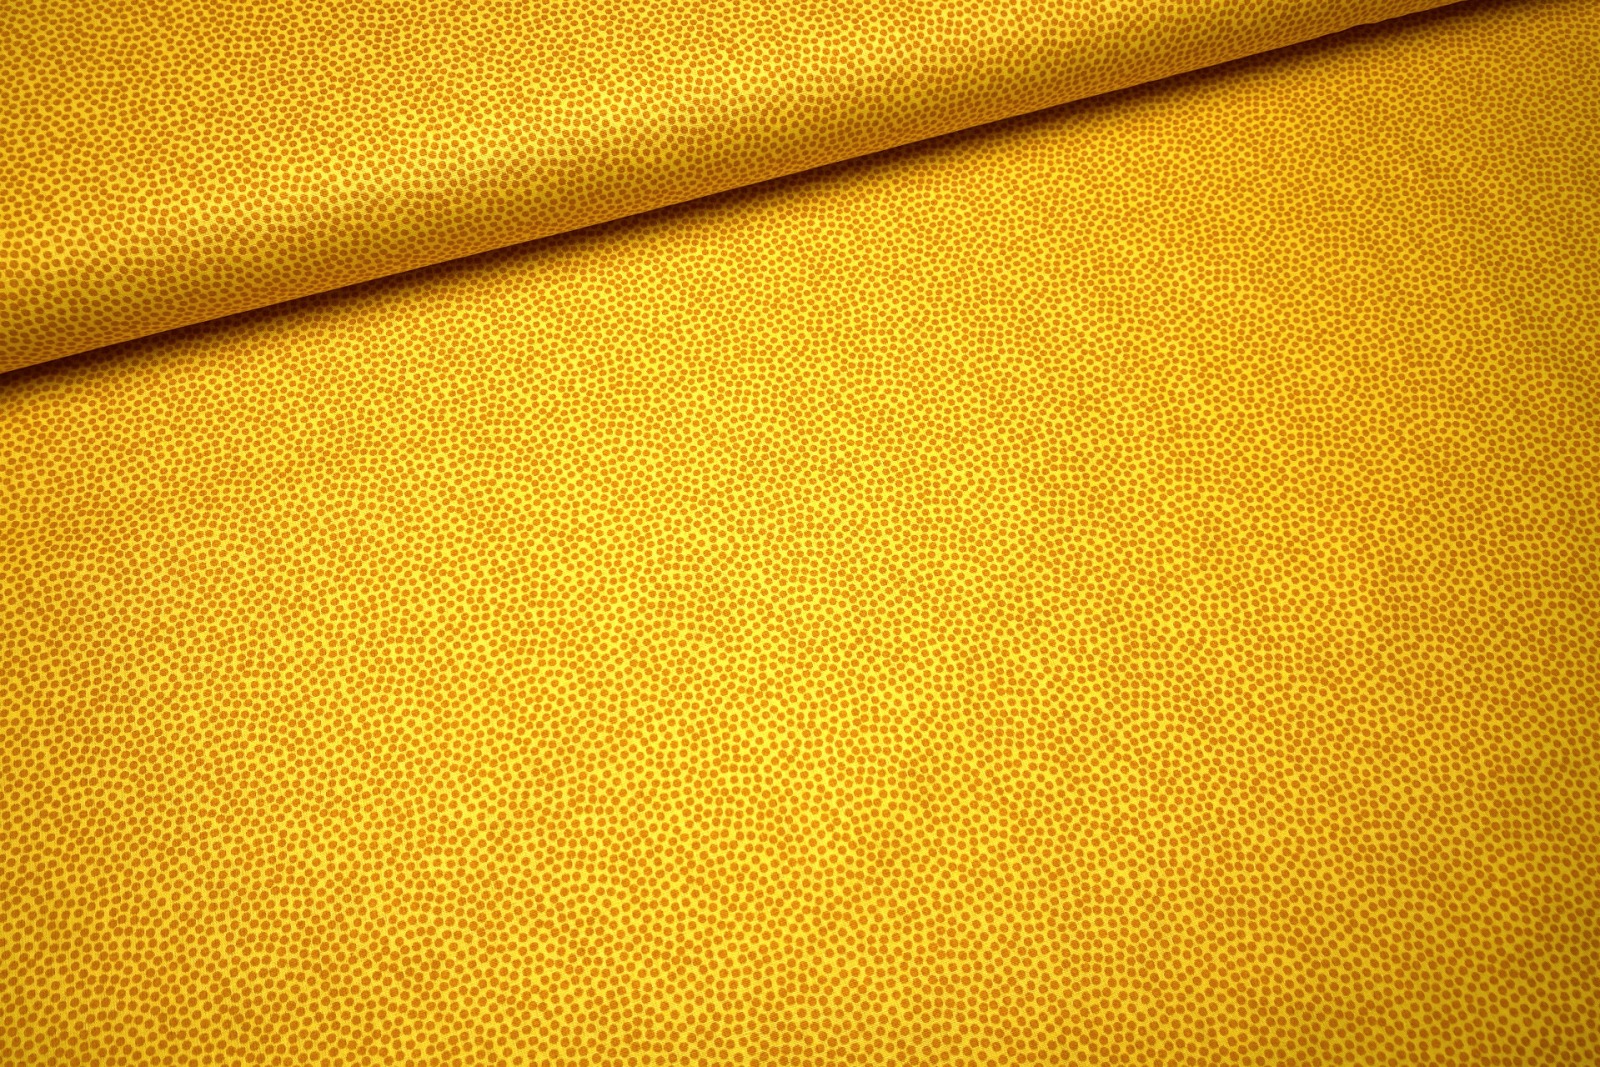 Baumwollwebware - unregelmäßige Punkte - gelb/ocker - 100% Baumwolle - Dotty - Swafing 3